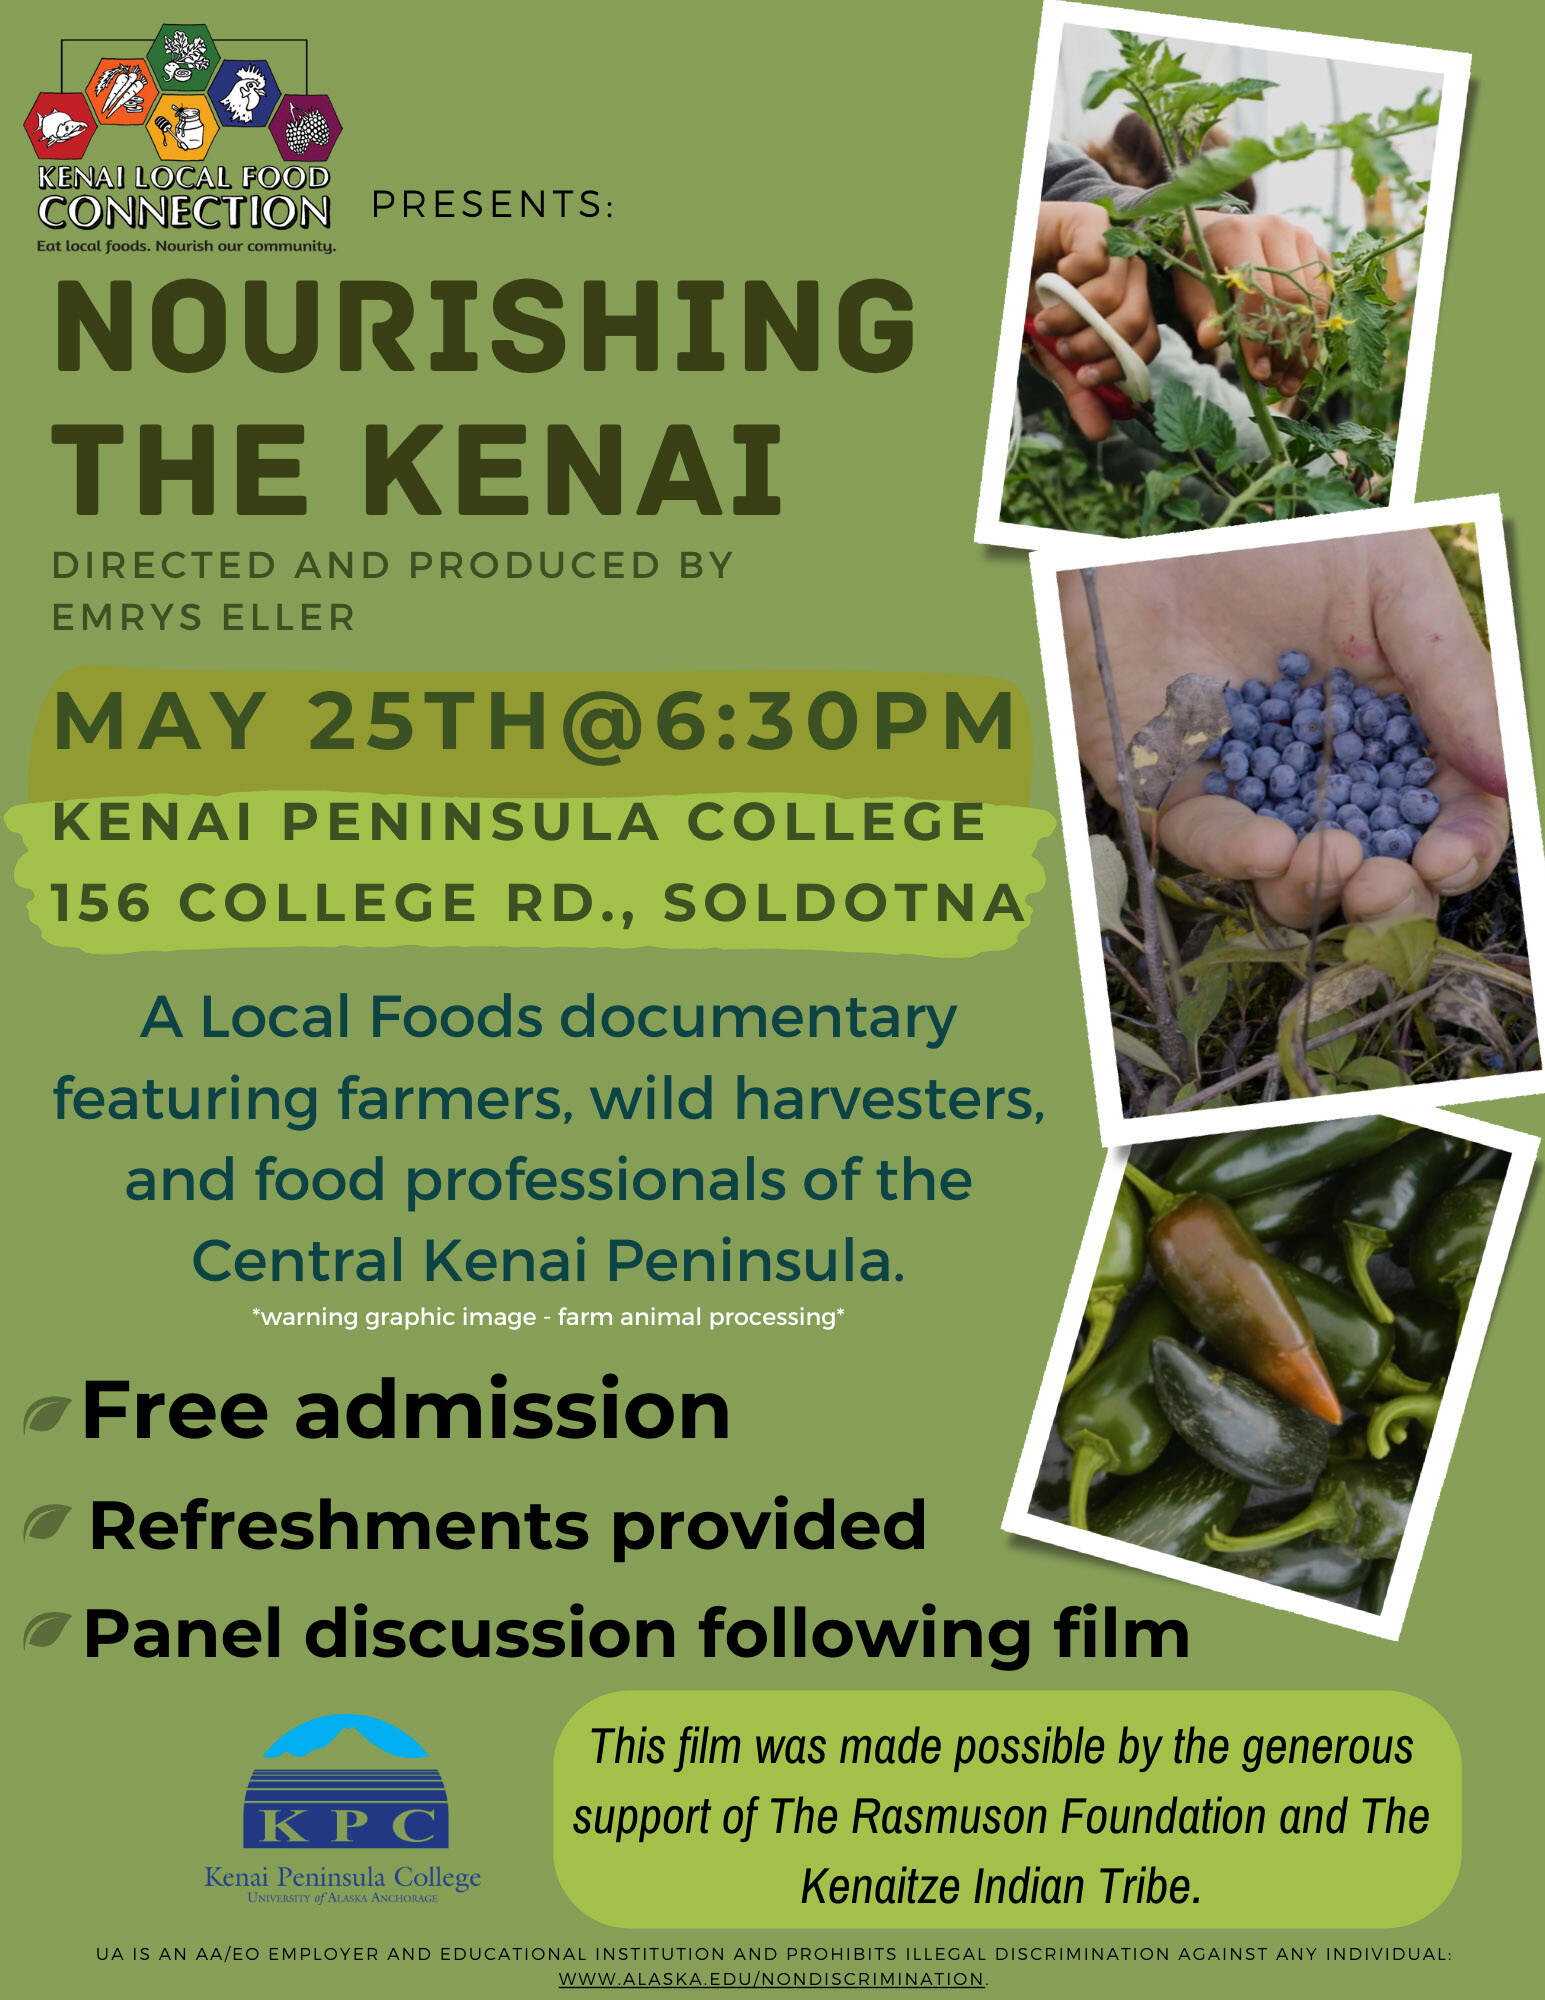 Promotional image for "Nourishing the Kenai." (Photo courtesy Kenai Local Food Connection)